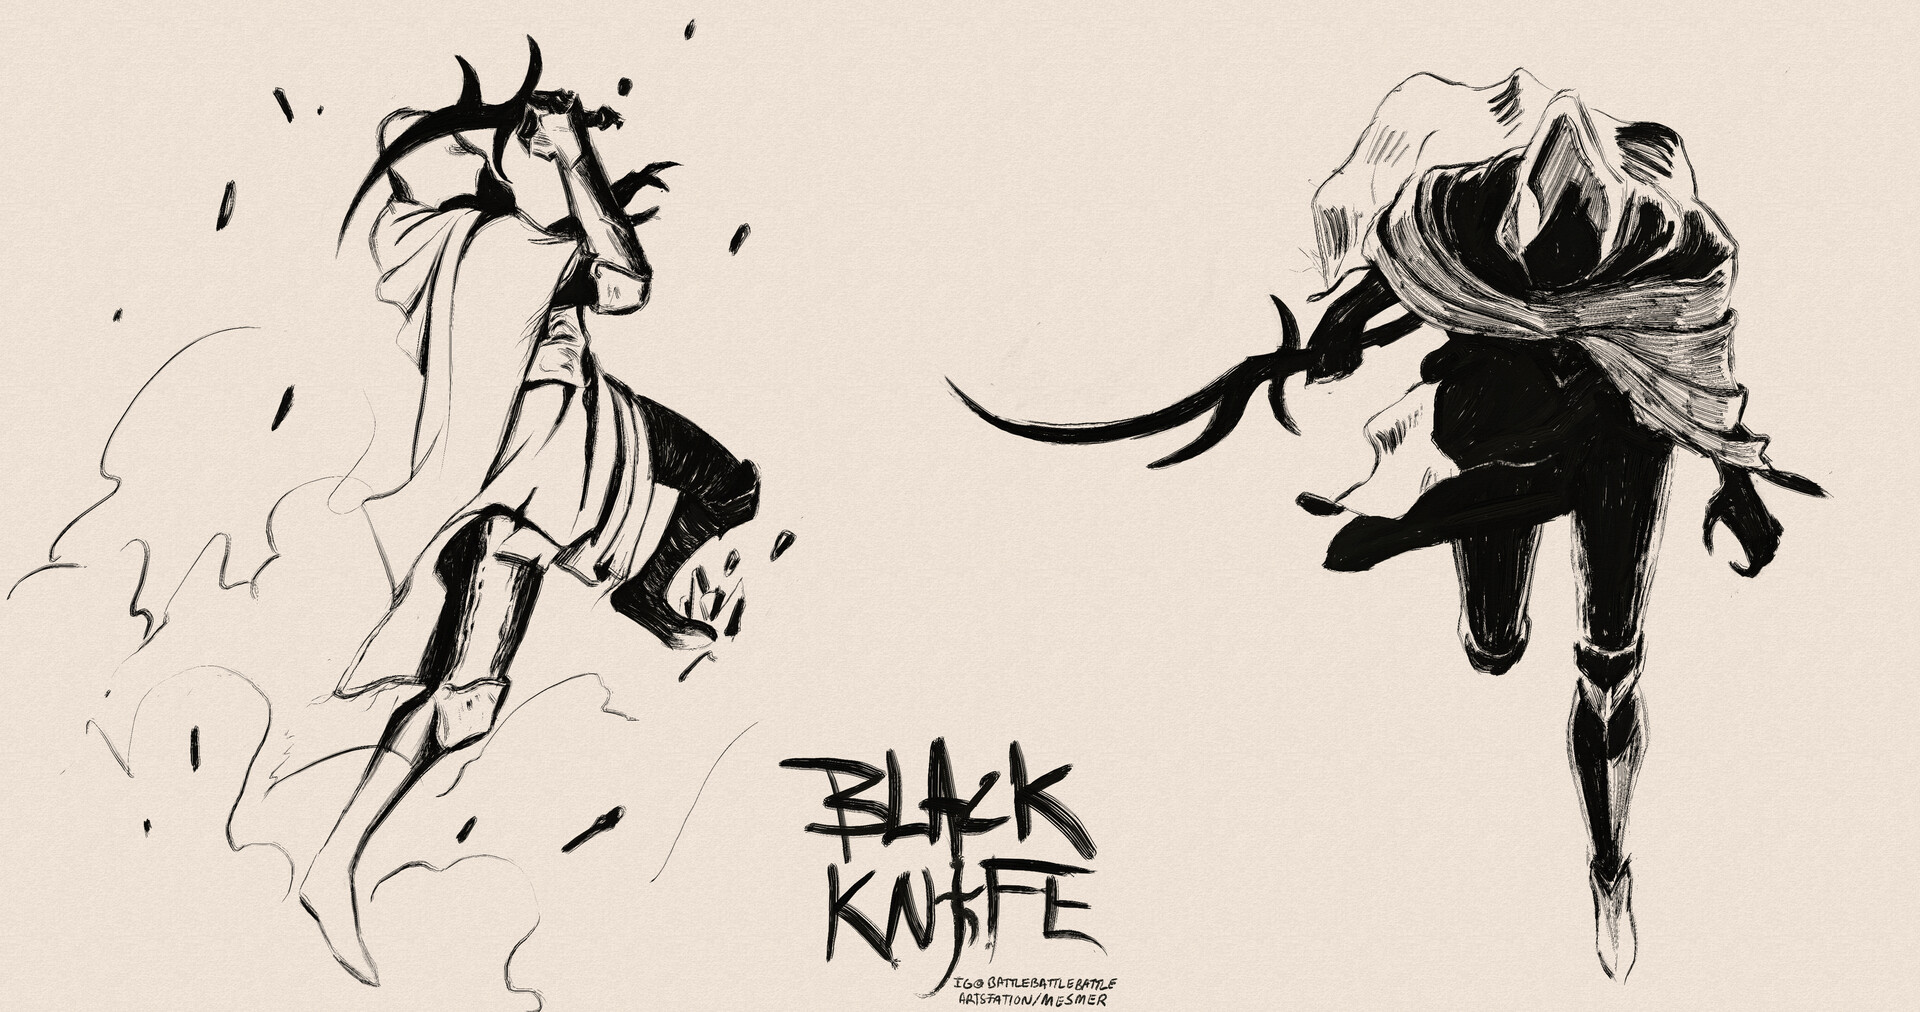 fanart] Black knife assassin : r/Eldenring